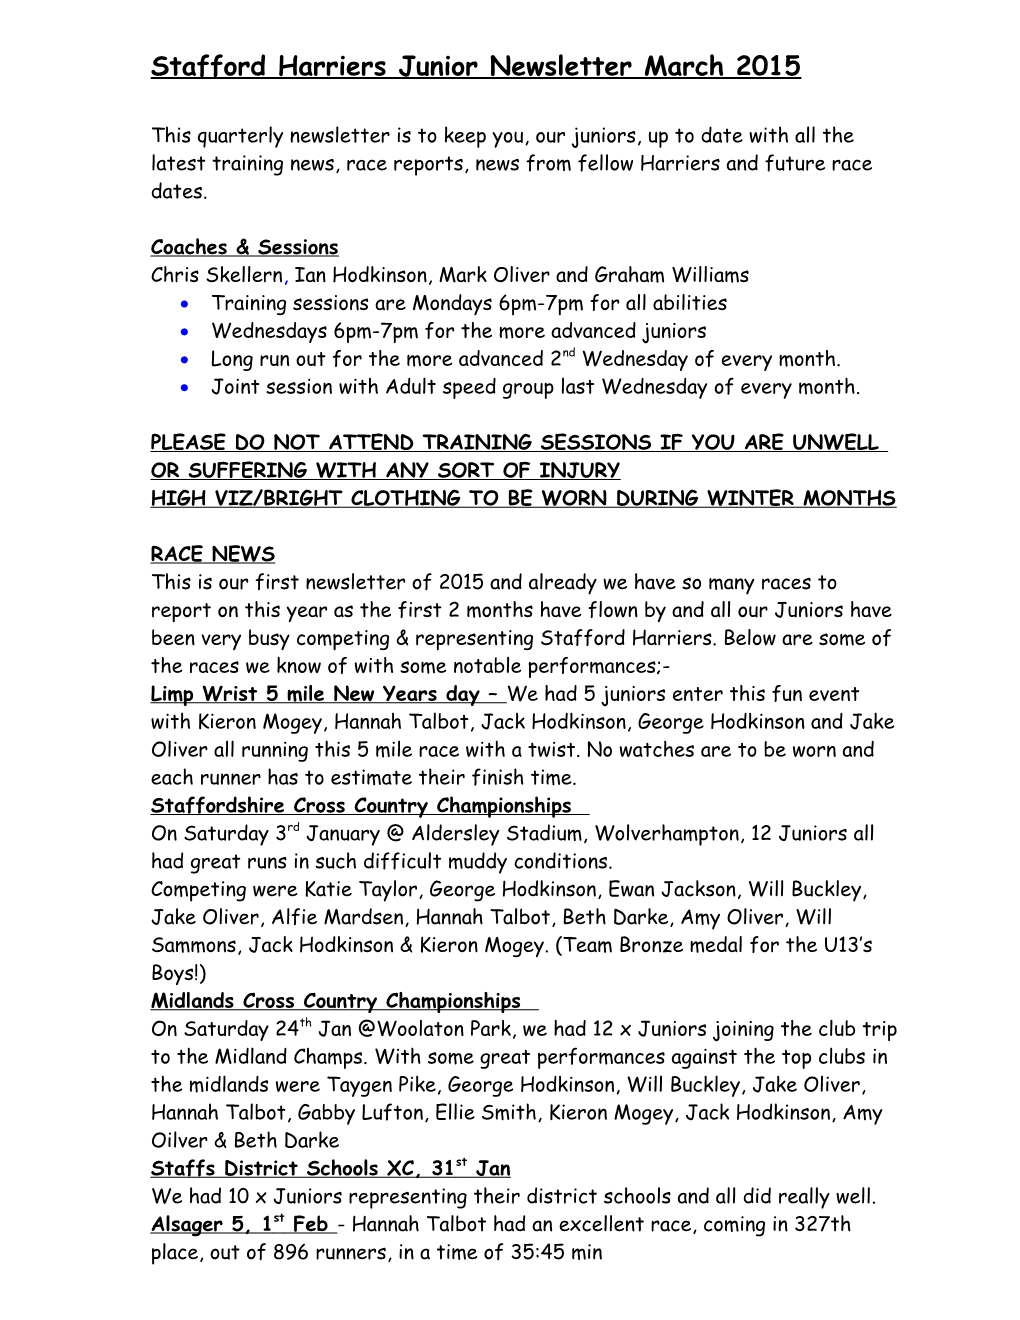 Stafford Harriers Junior Newsletter January 2014